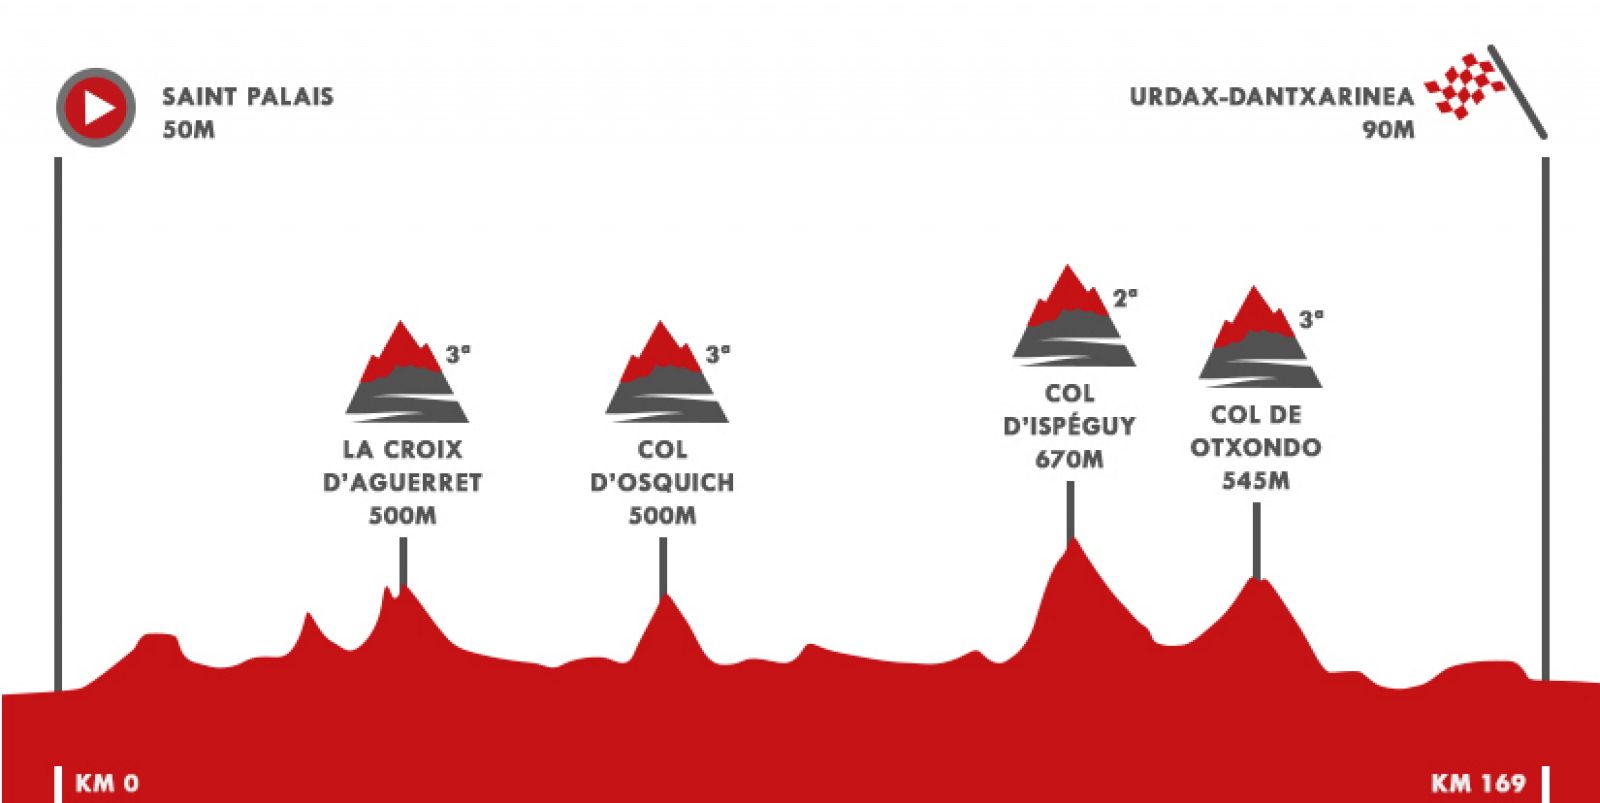 Vuelta a España 2019 | Perfil de la etapa 11: Saint Palais - Urdax-Dantxarinea